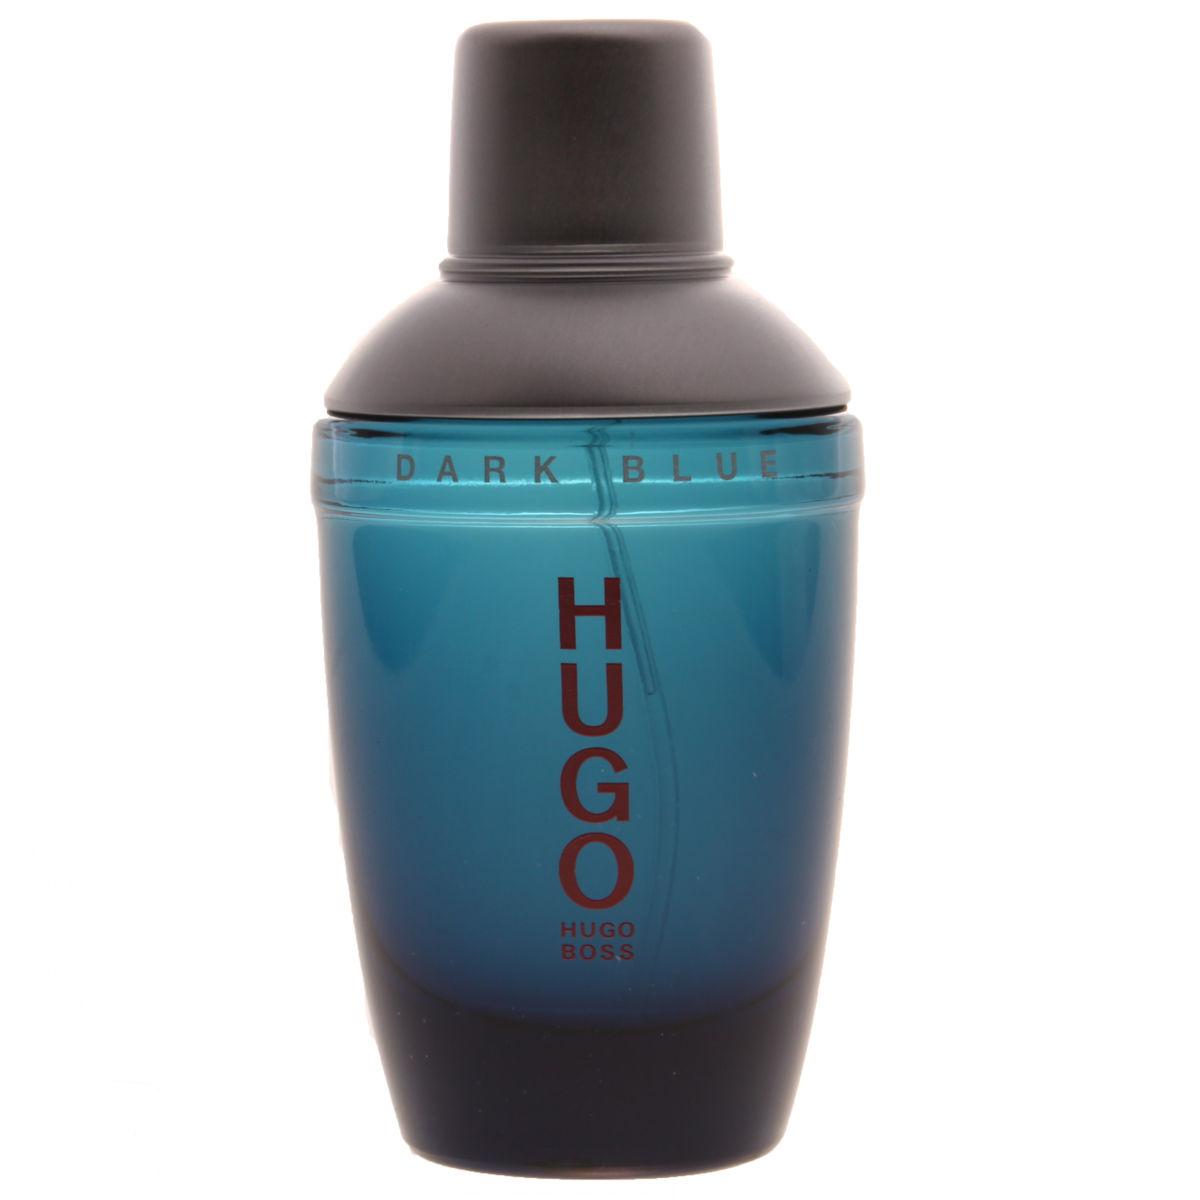 hugo boss dark blue 75ml cena